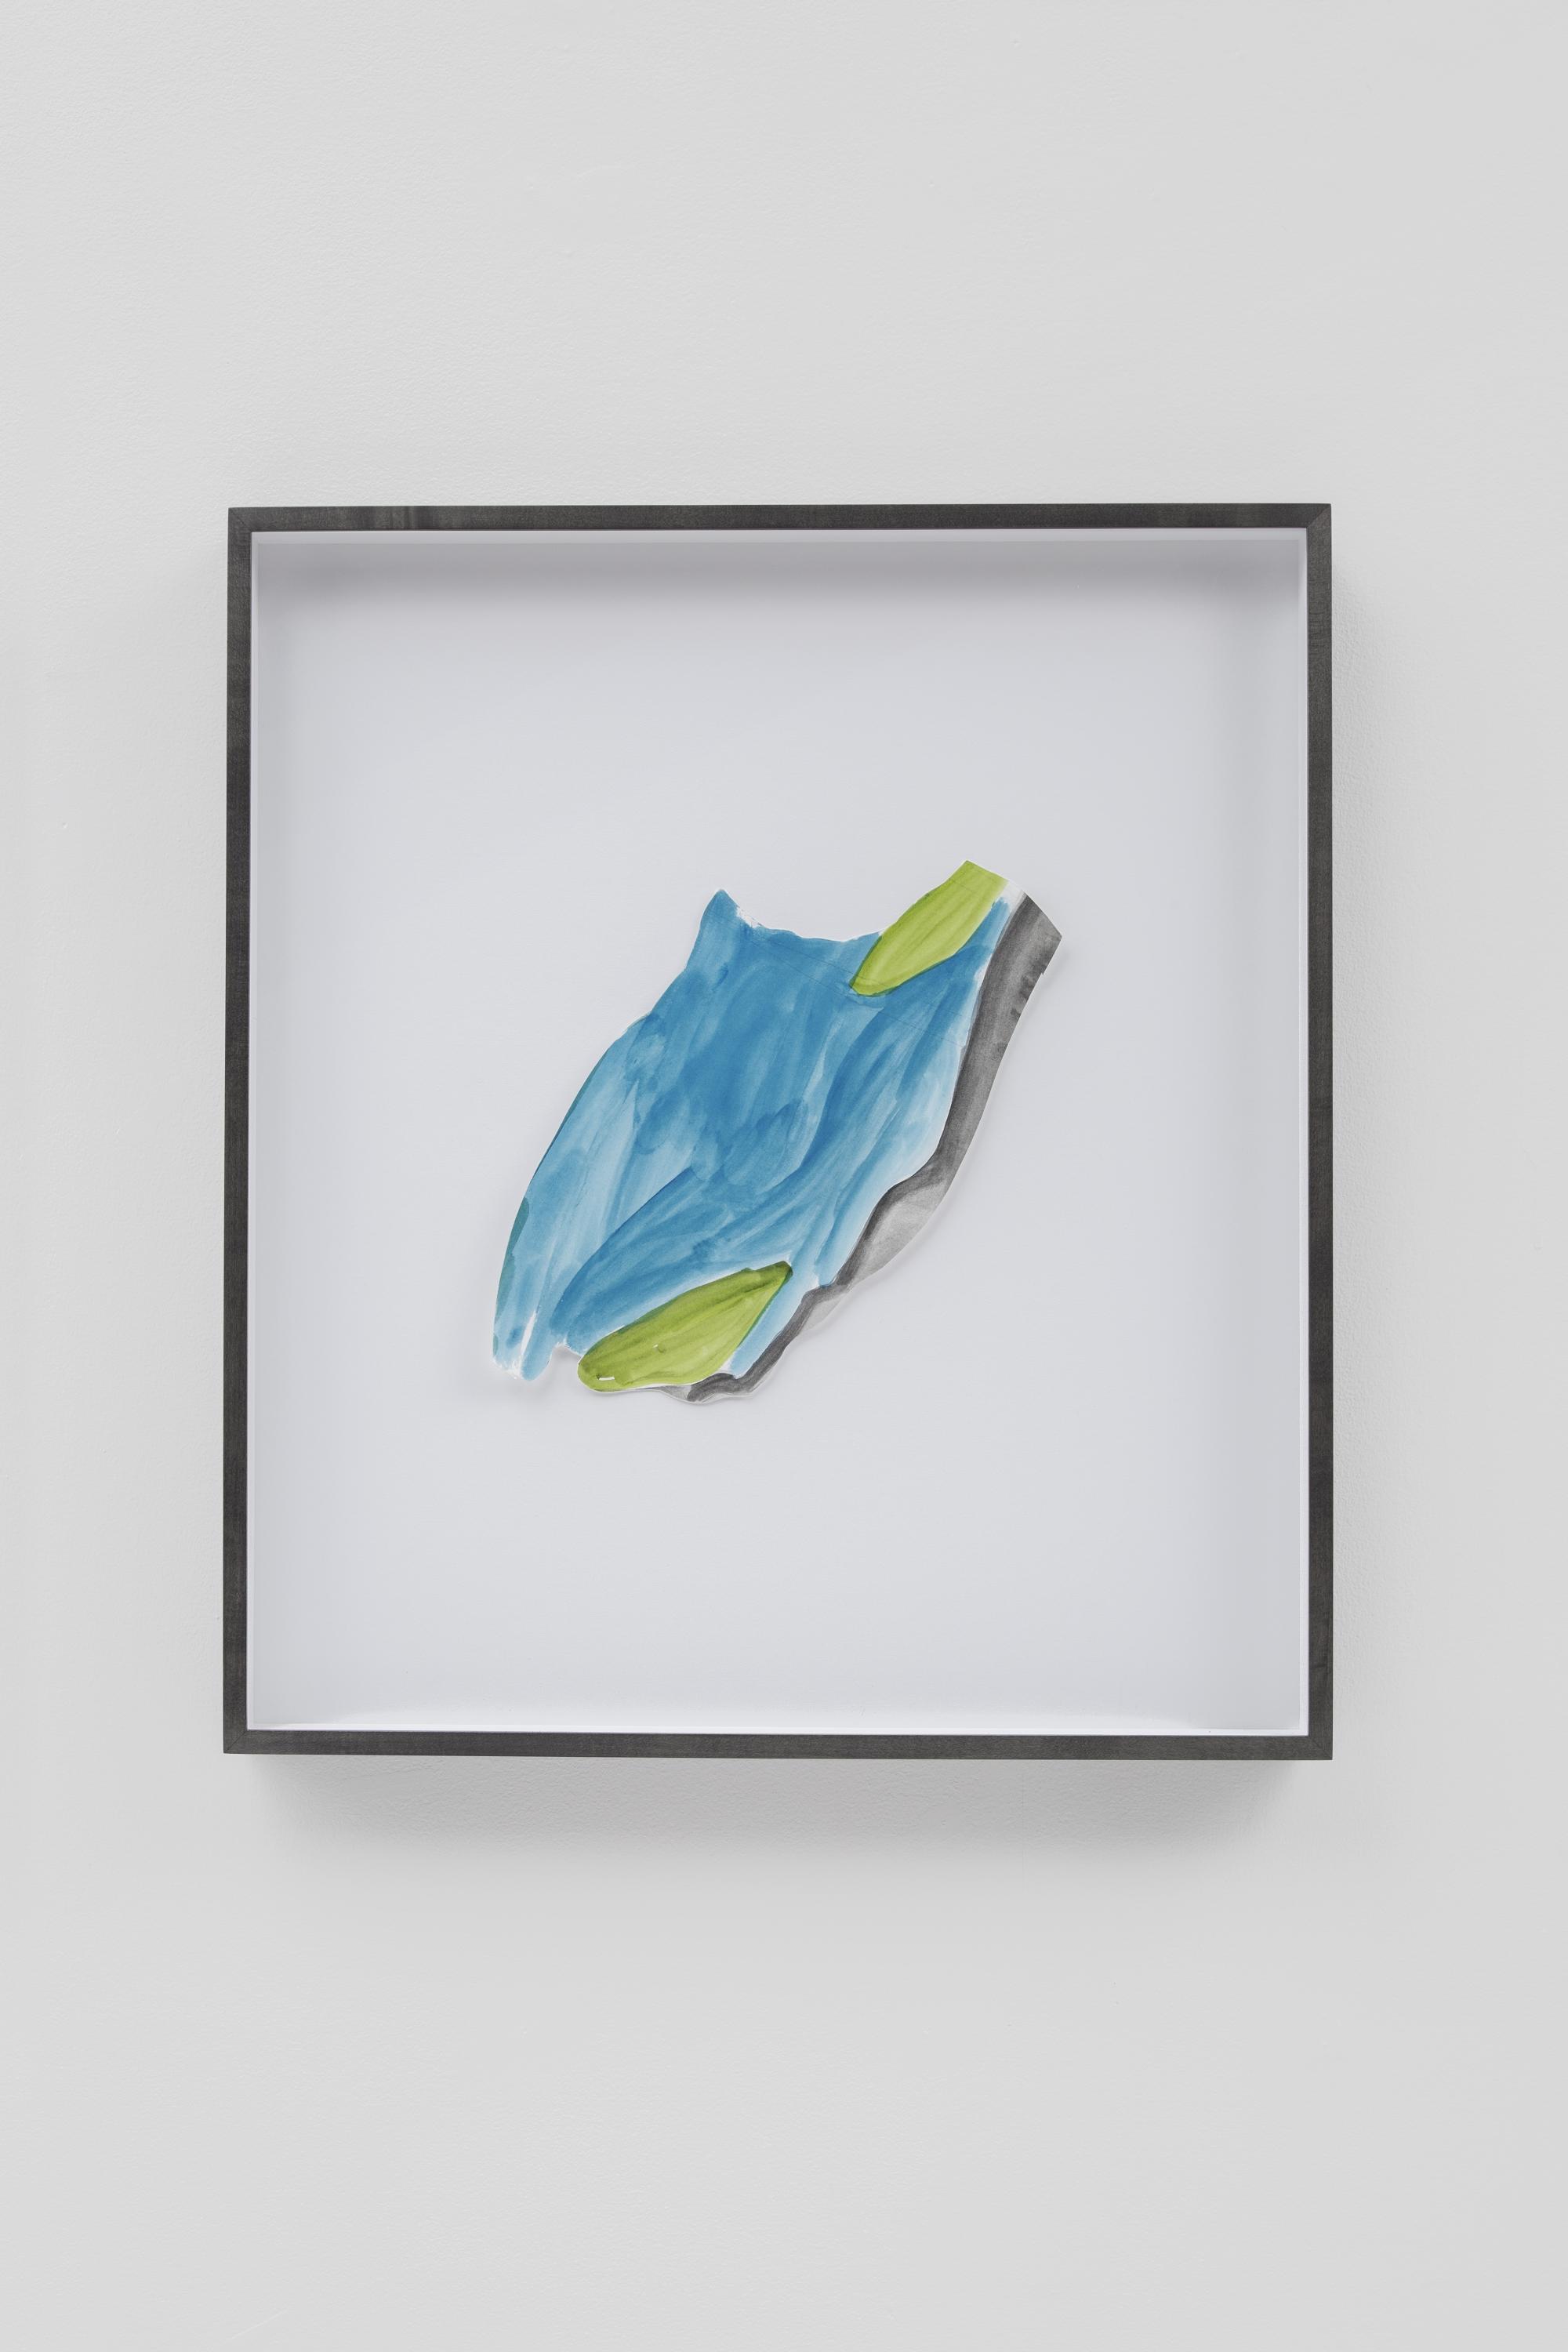 Monique Mouton, Venus, n.d., watercolor, pencil on paper, pearl gray, silver gray, rottenstone on maple frame, 25 5/8 x 22 5/8 x 2 1/4".